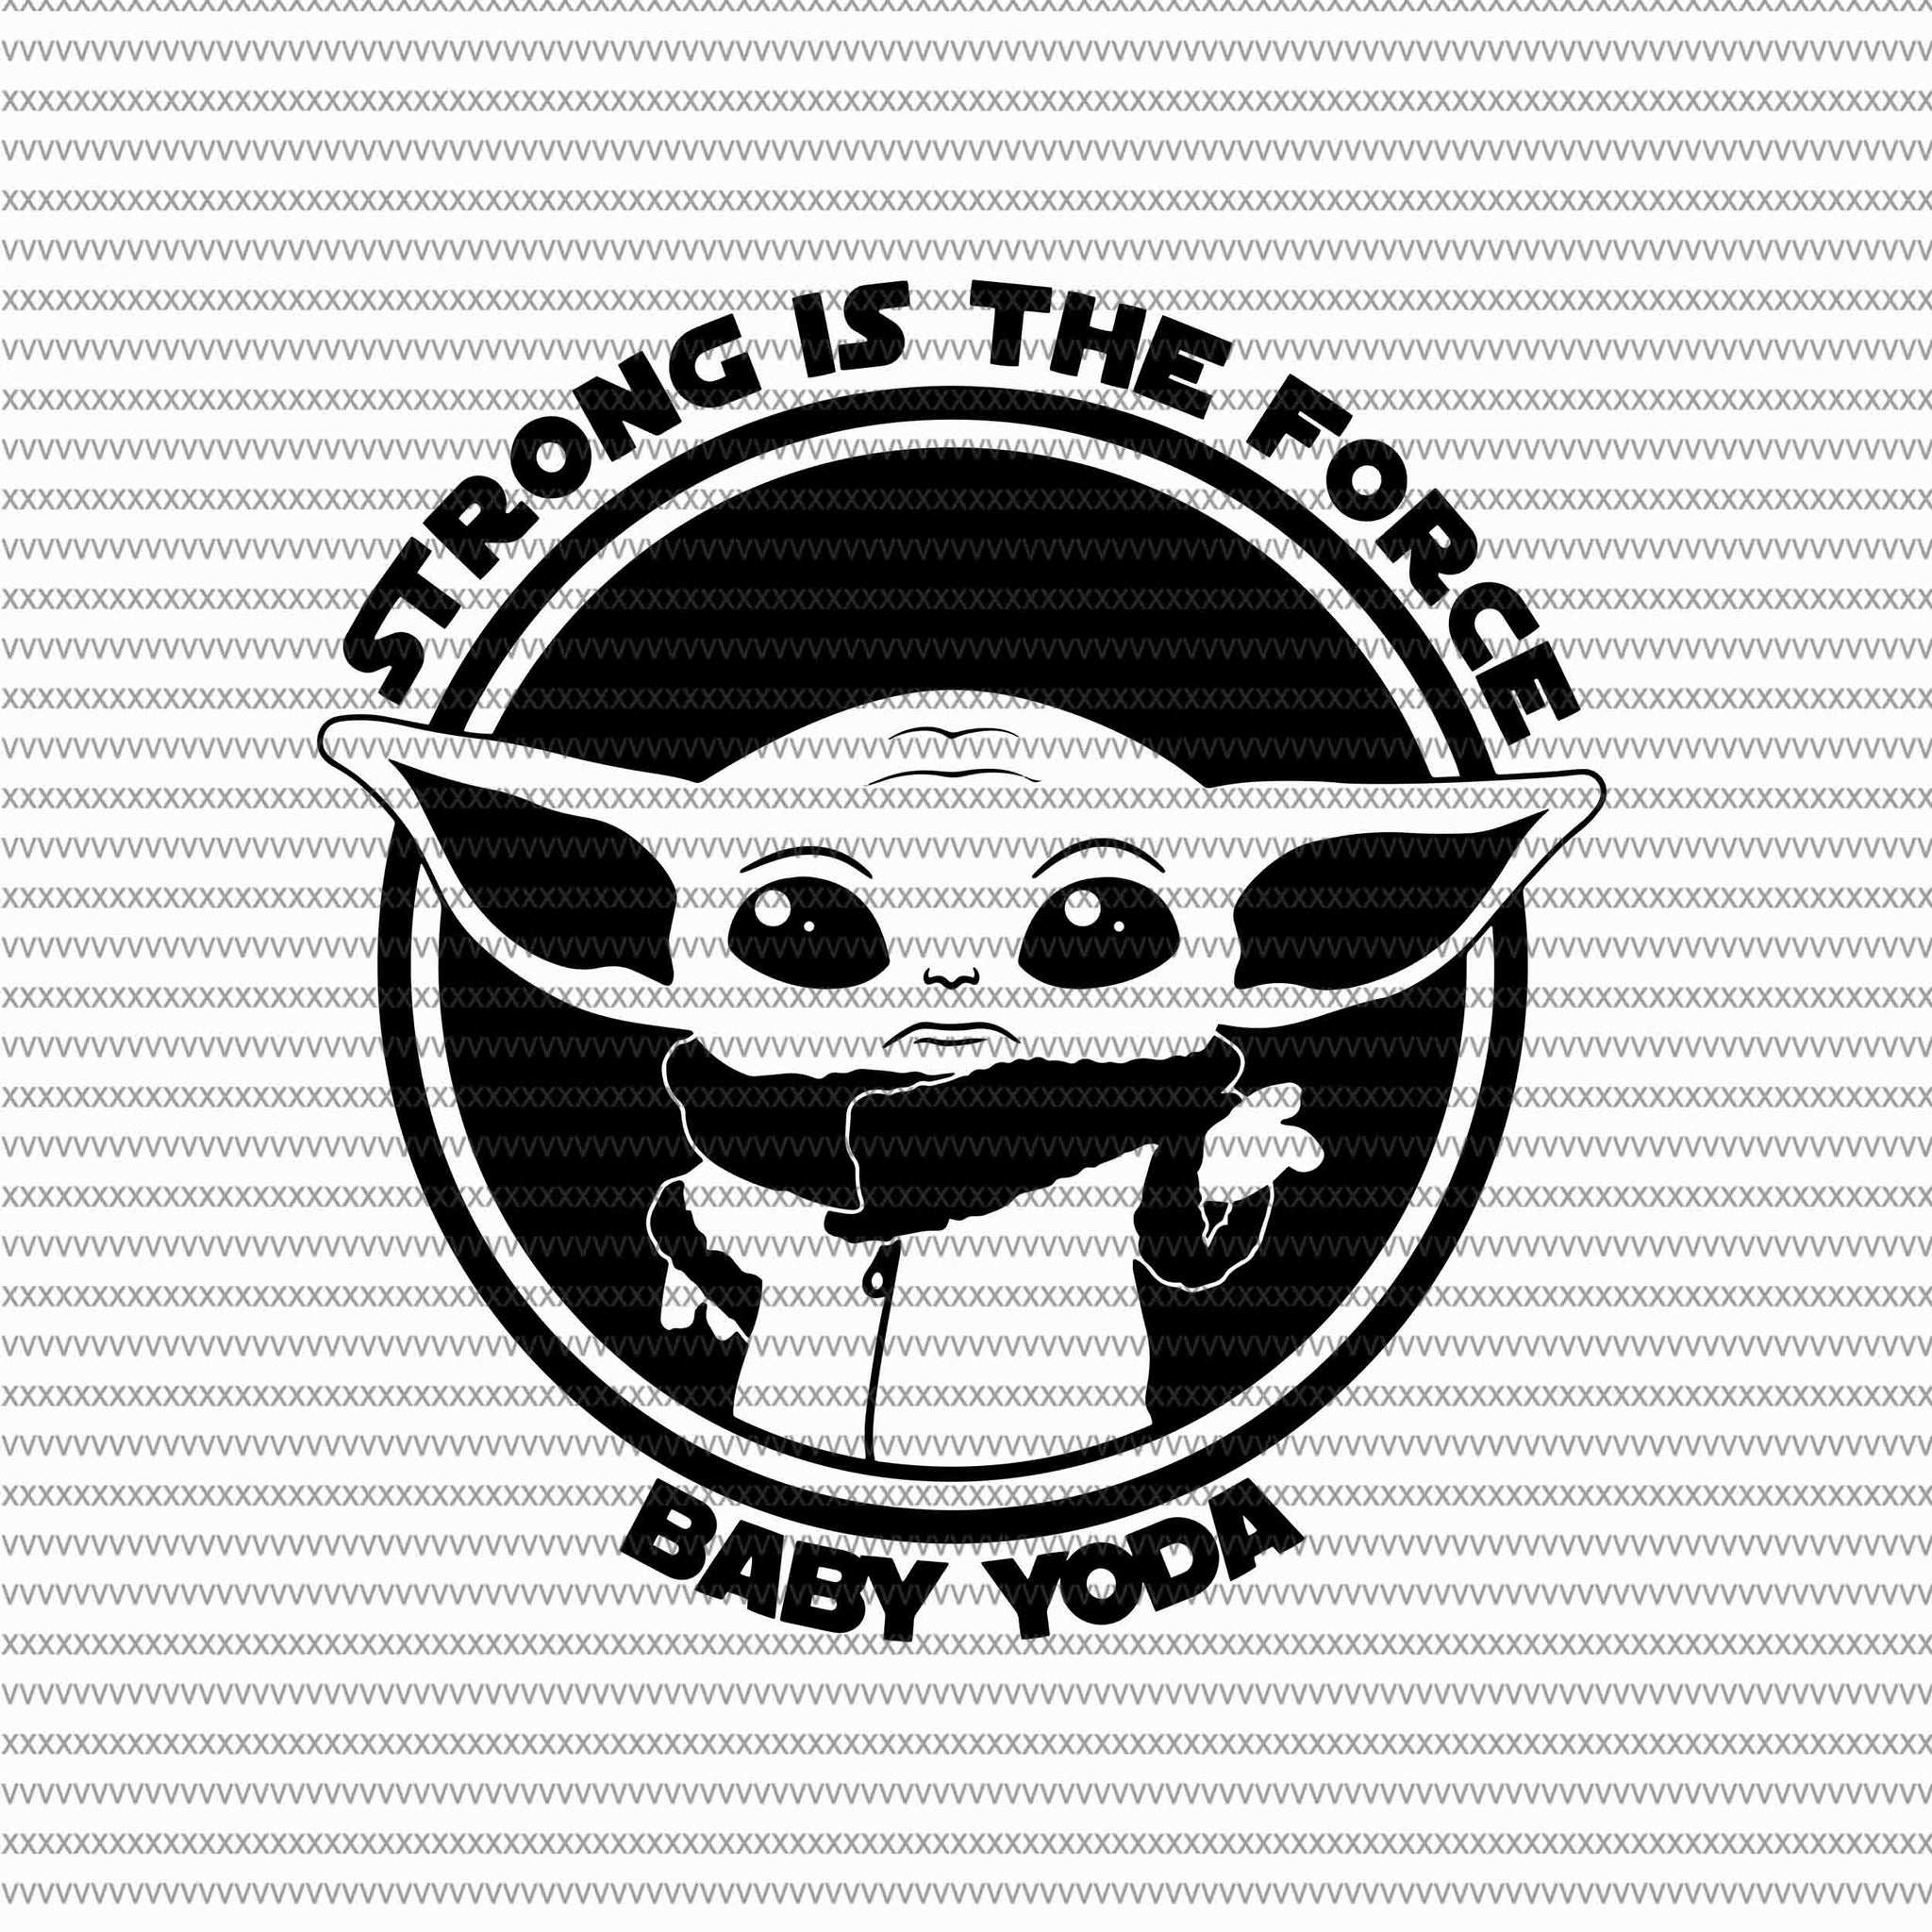 Strong is the force, Baby on board, Baby yoda svg, baby yoda vector, baby yoda digital file, star wars svg, star wars vector, The Mandalorian the child svg